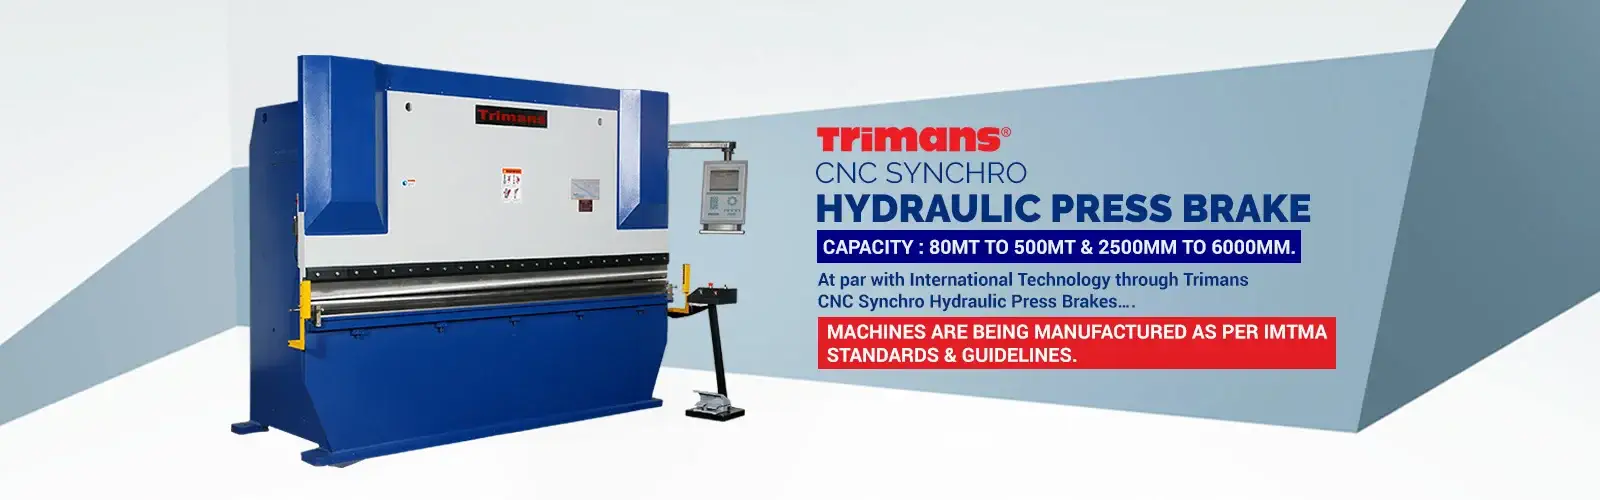 CNC Synchro Hydraulic Press Brakes Manufacturers